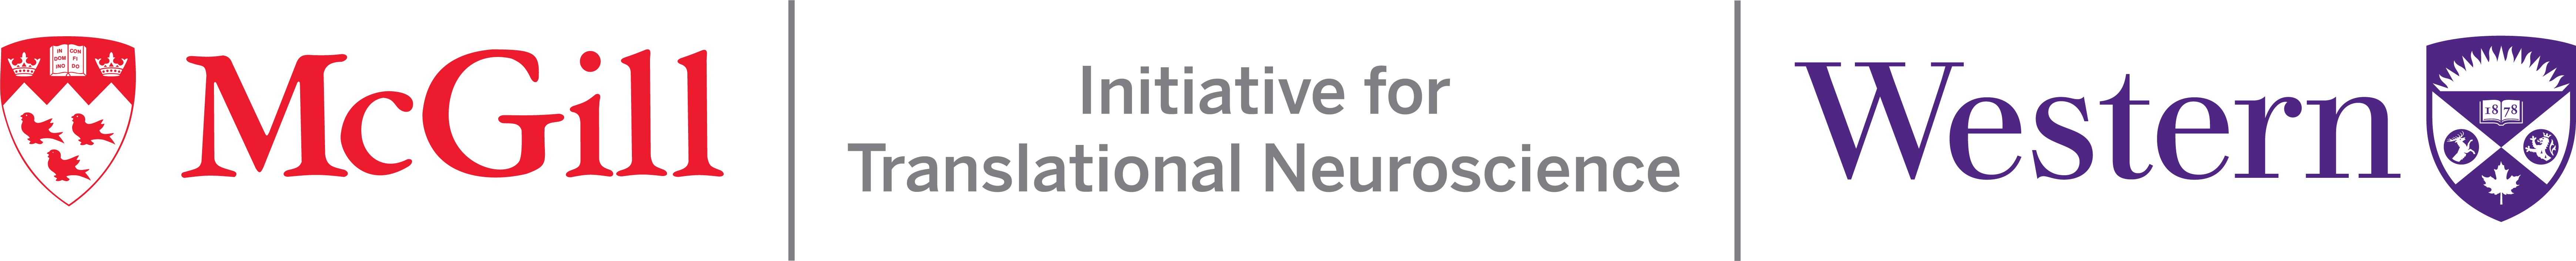 McGill-Western Initiative for Translational Neuroscience (ITN) logo